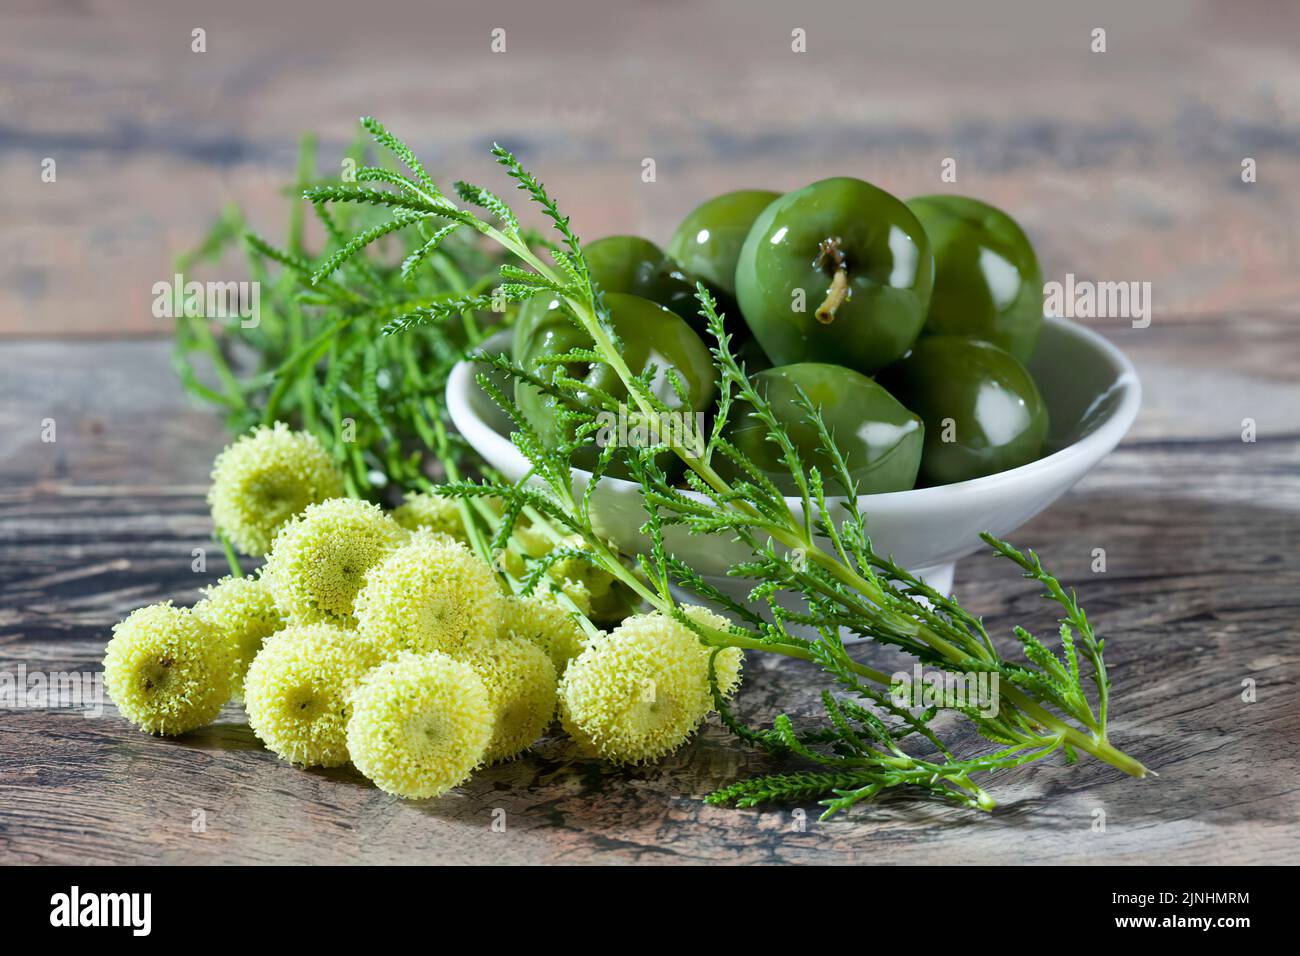 Bowl of green olives and green santolina Stock Photo